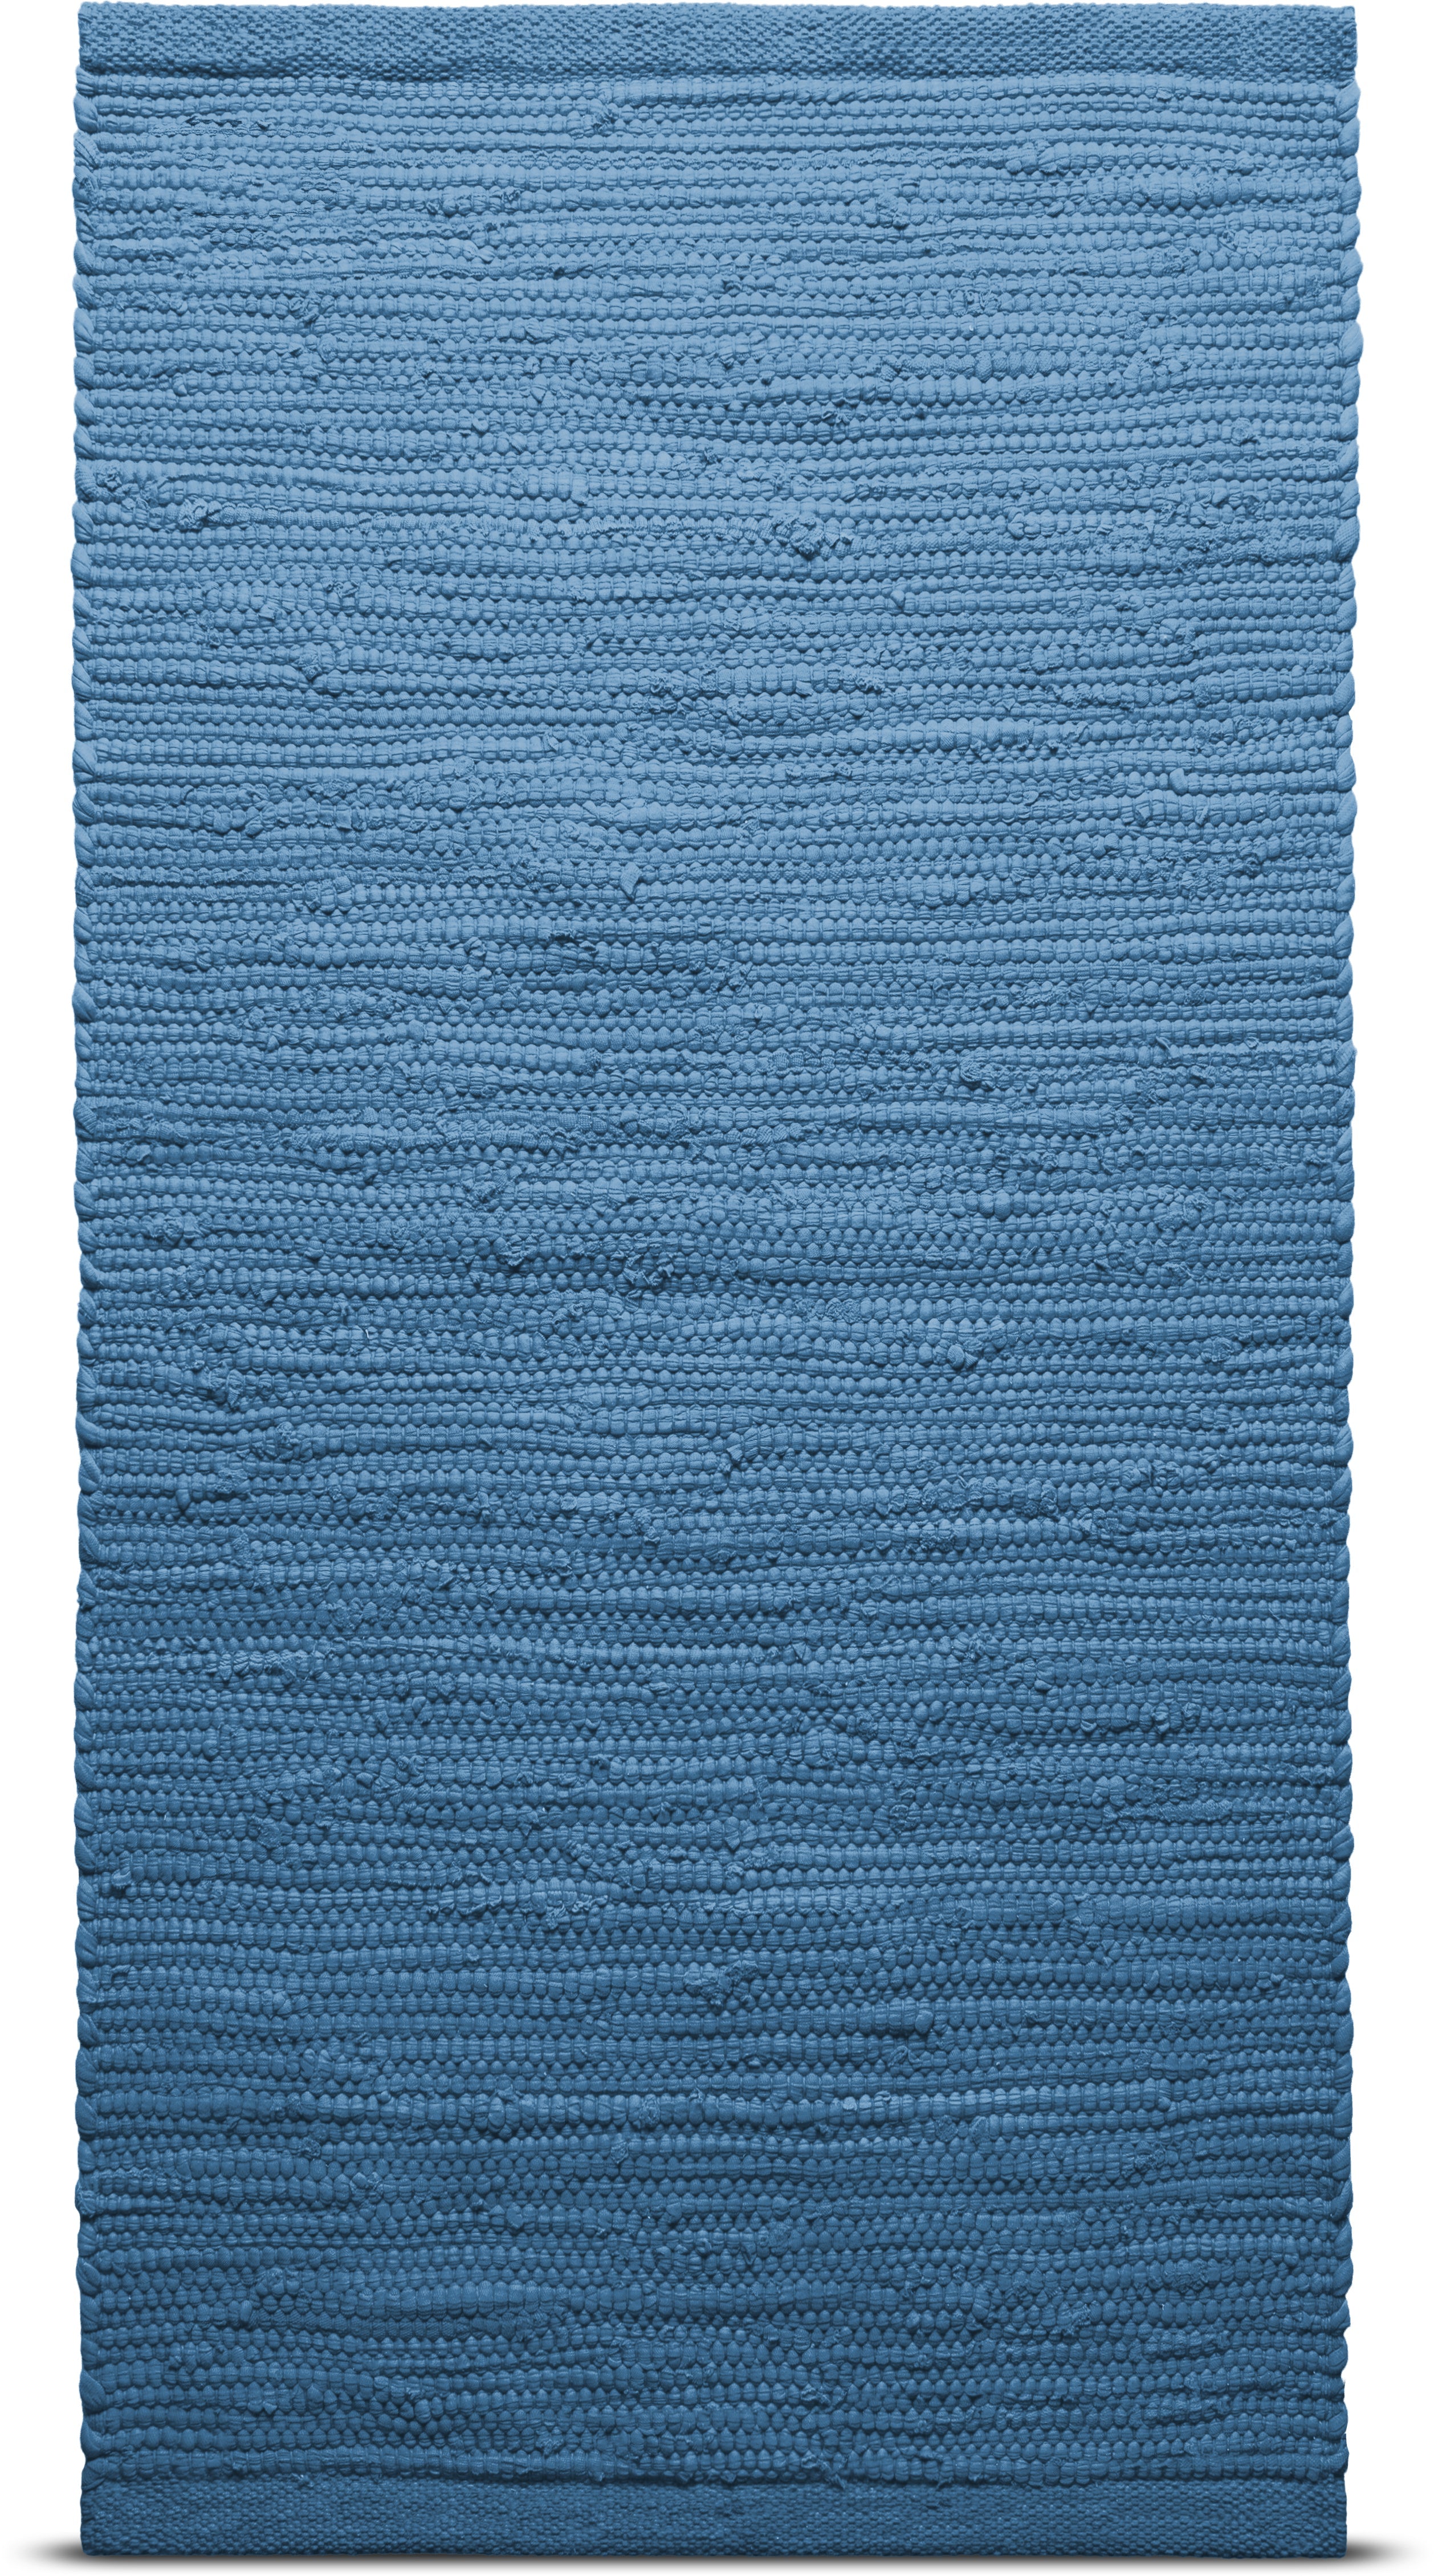 Koberec pevný bavlněný koberec 140 x 200 cm, Pacifik